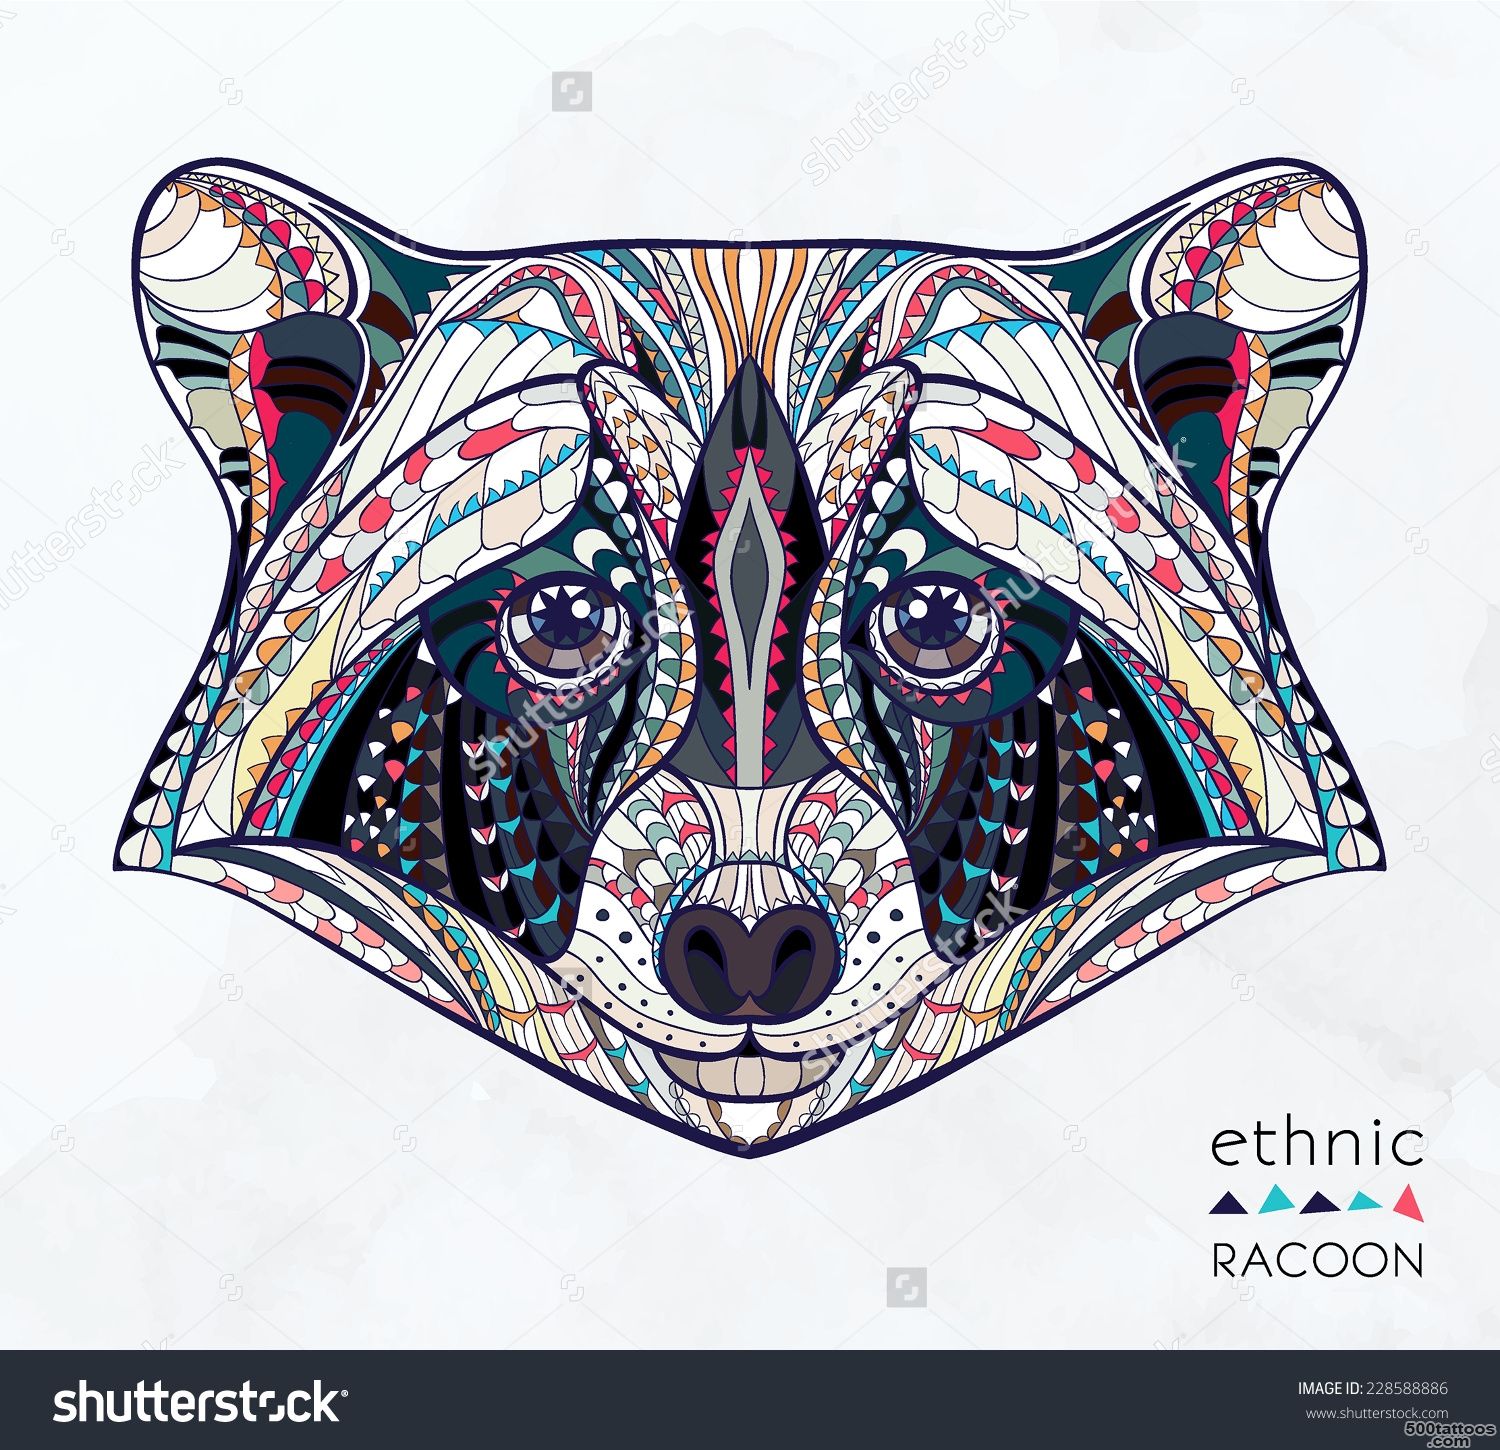 Ethnic Raccoon  African  Indian  Totem  Tattoo Design Stock ..._15